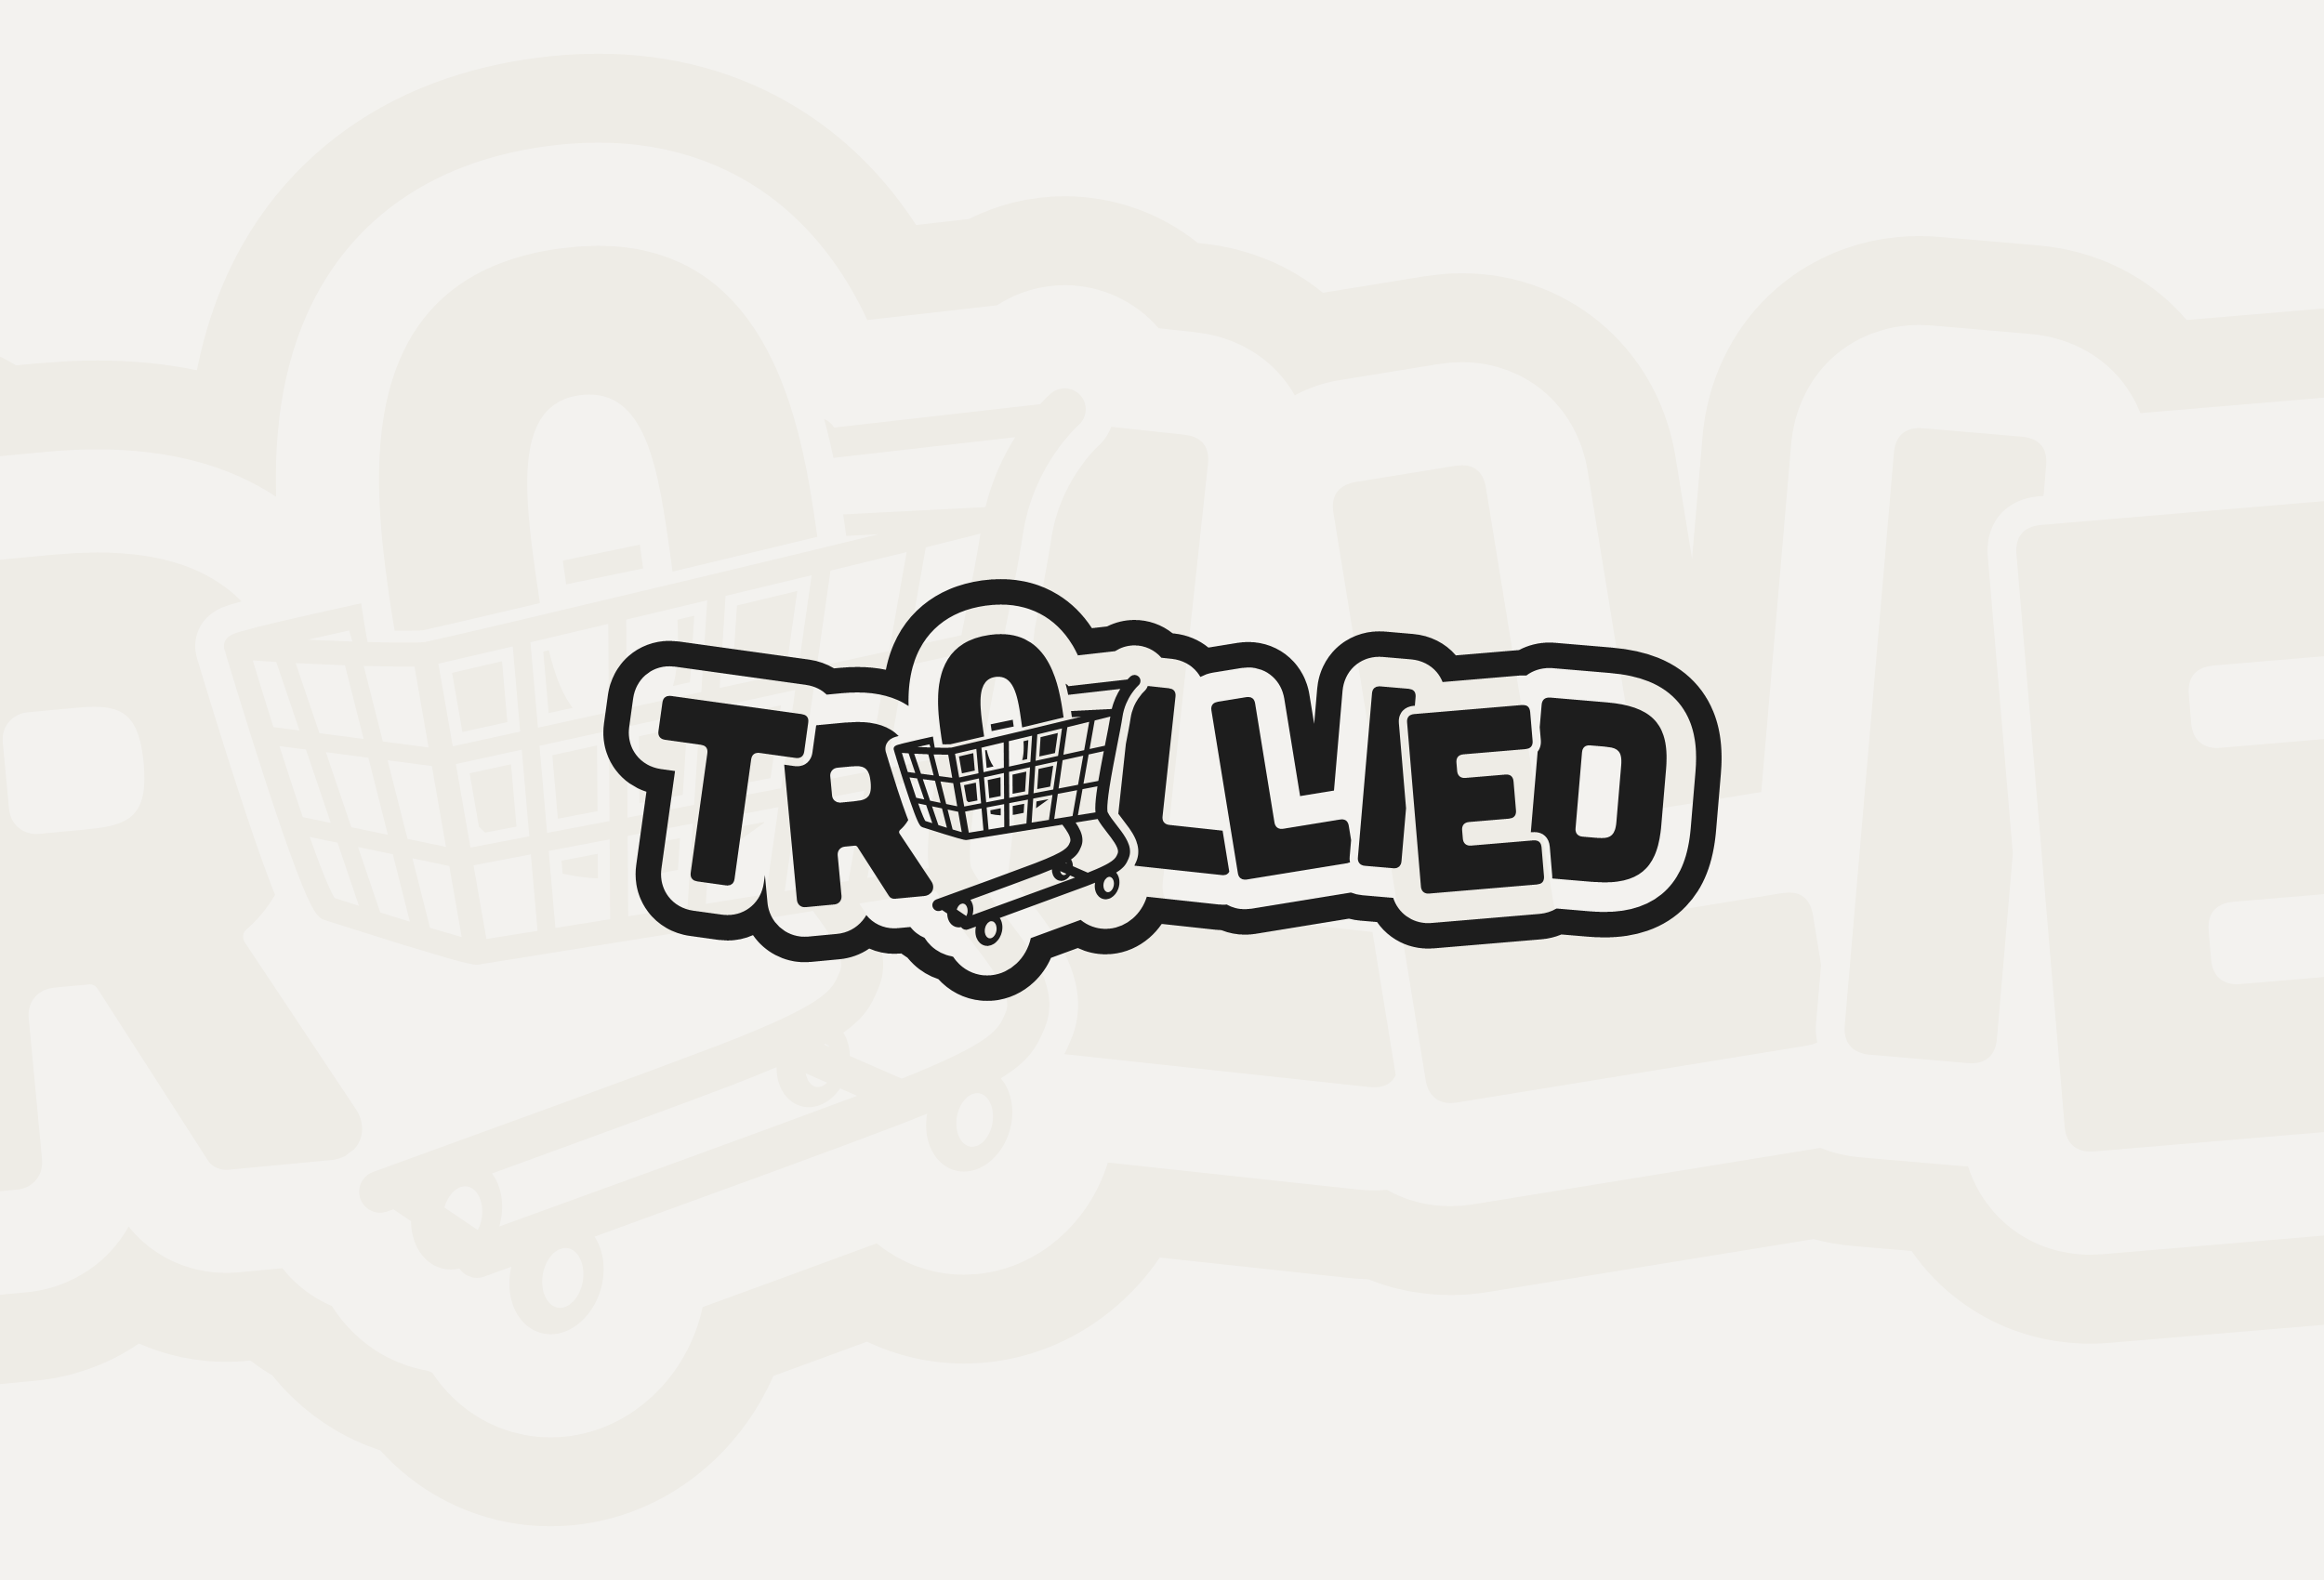 Trollied logo design.